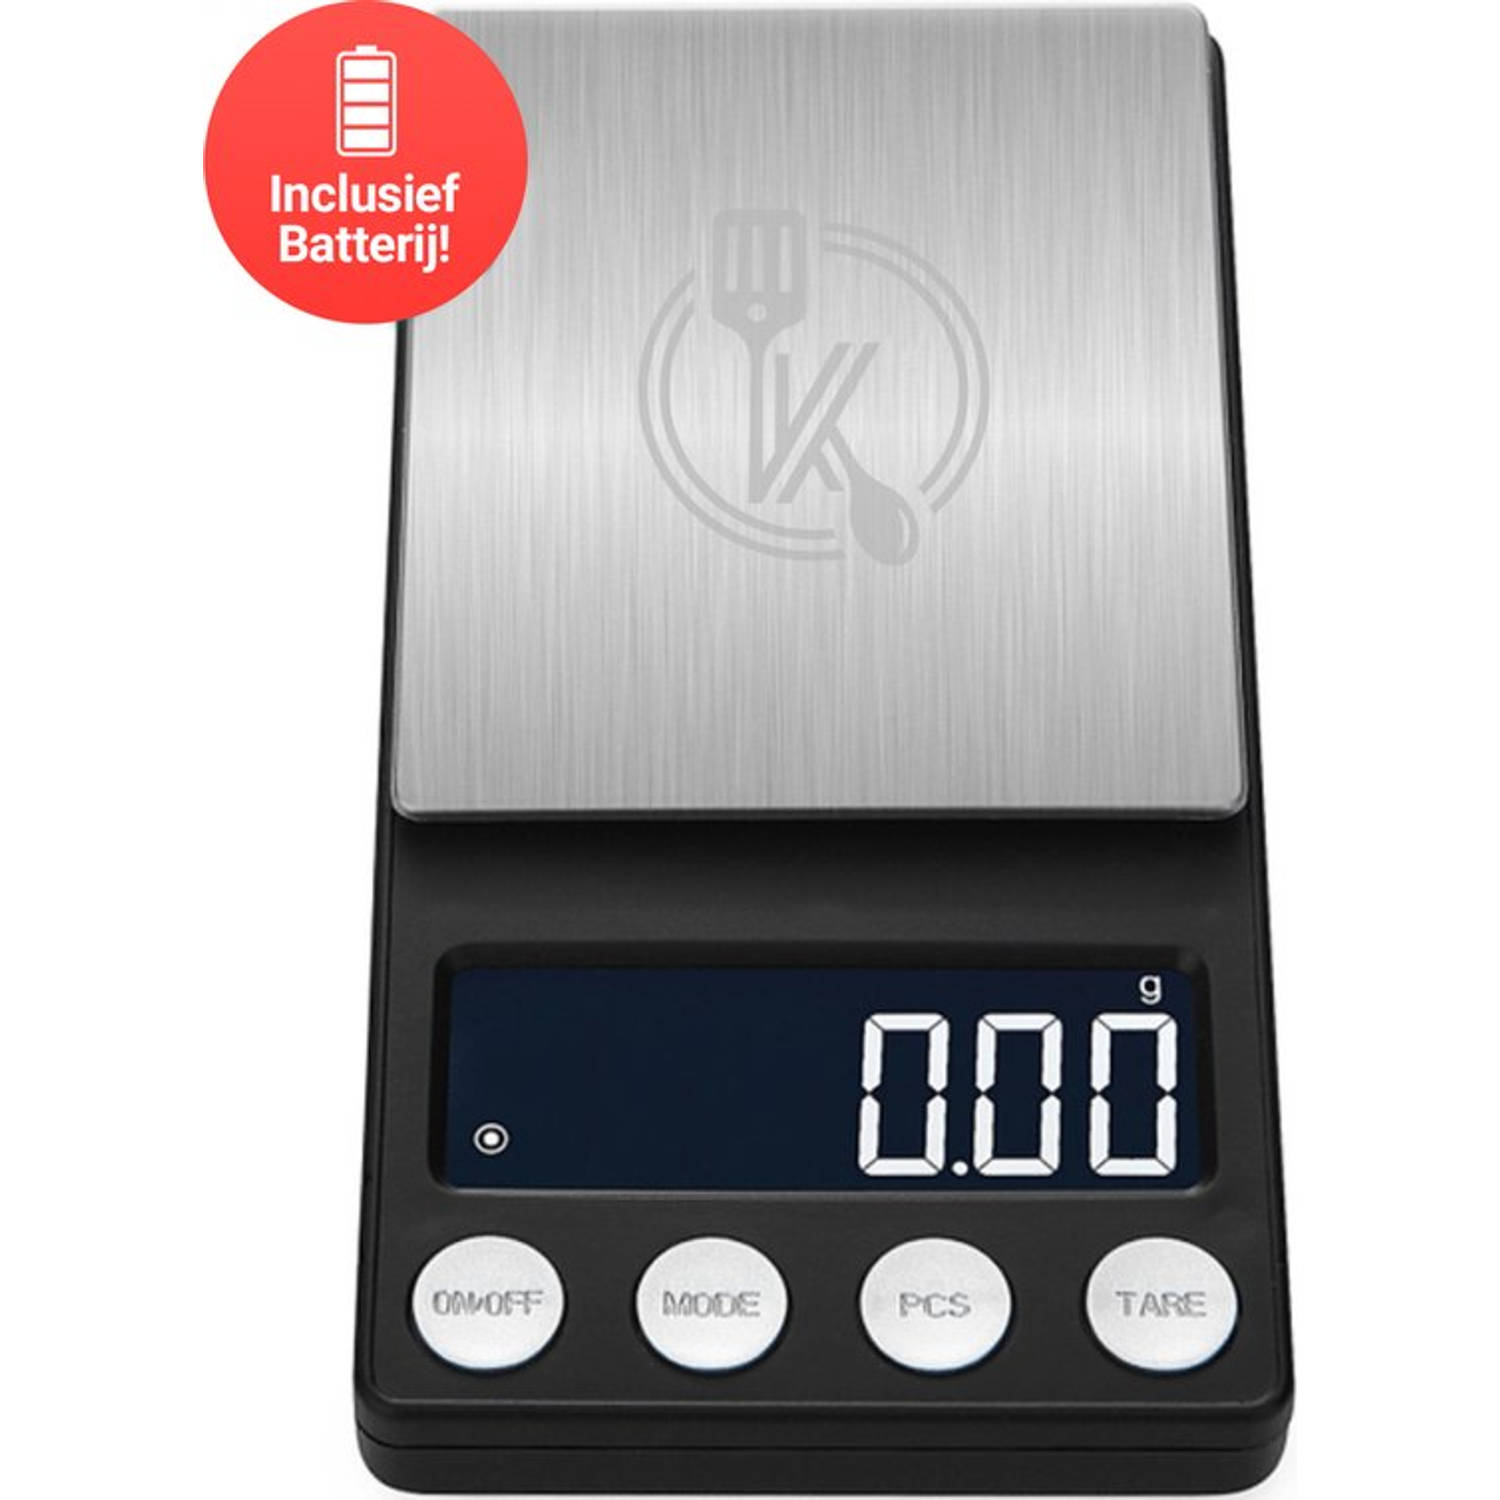 Ease Electronicz Digitale Mini Precisie Keukenweegschaal 0,01 Tot 200 Gram 14.2 X 7.5 Cm Pocket Scal